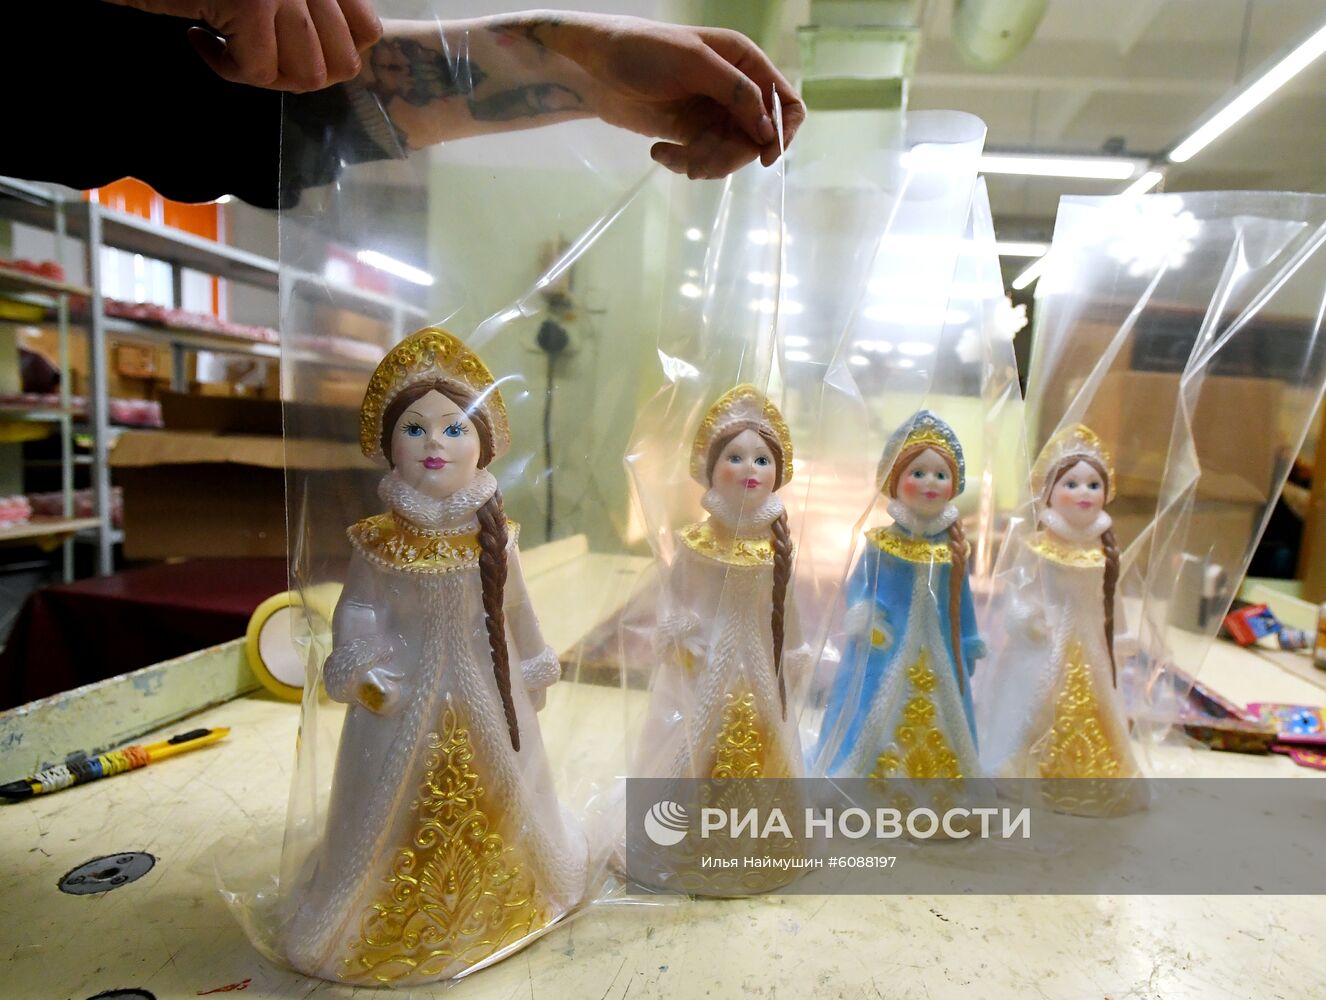 Производство новогодних игрушек на фабрике "Бирюсинка" в Красноярске